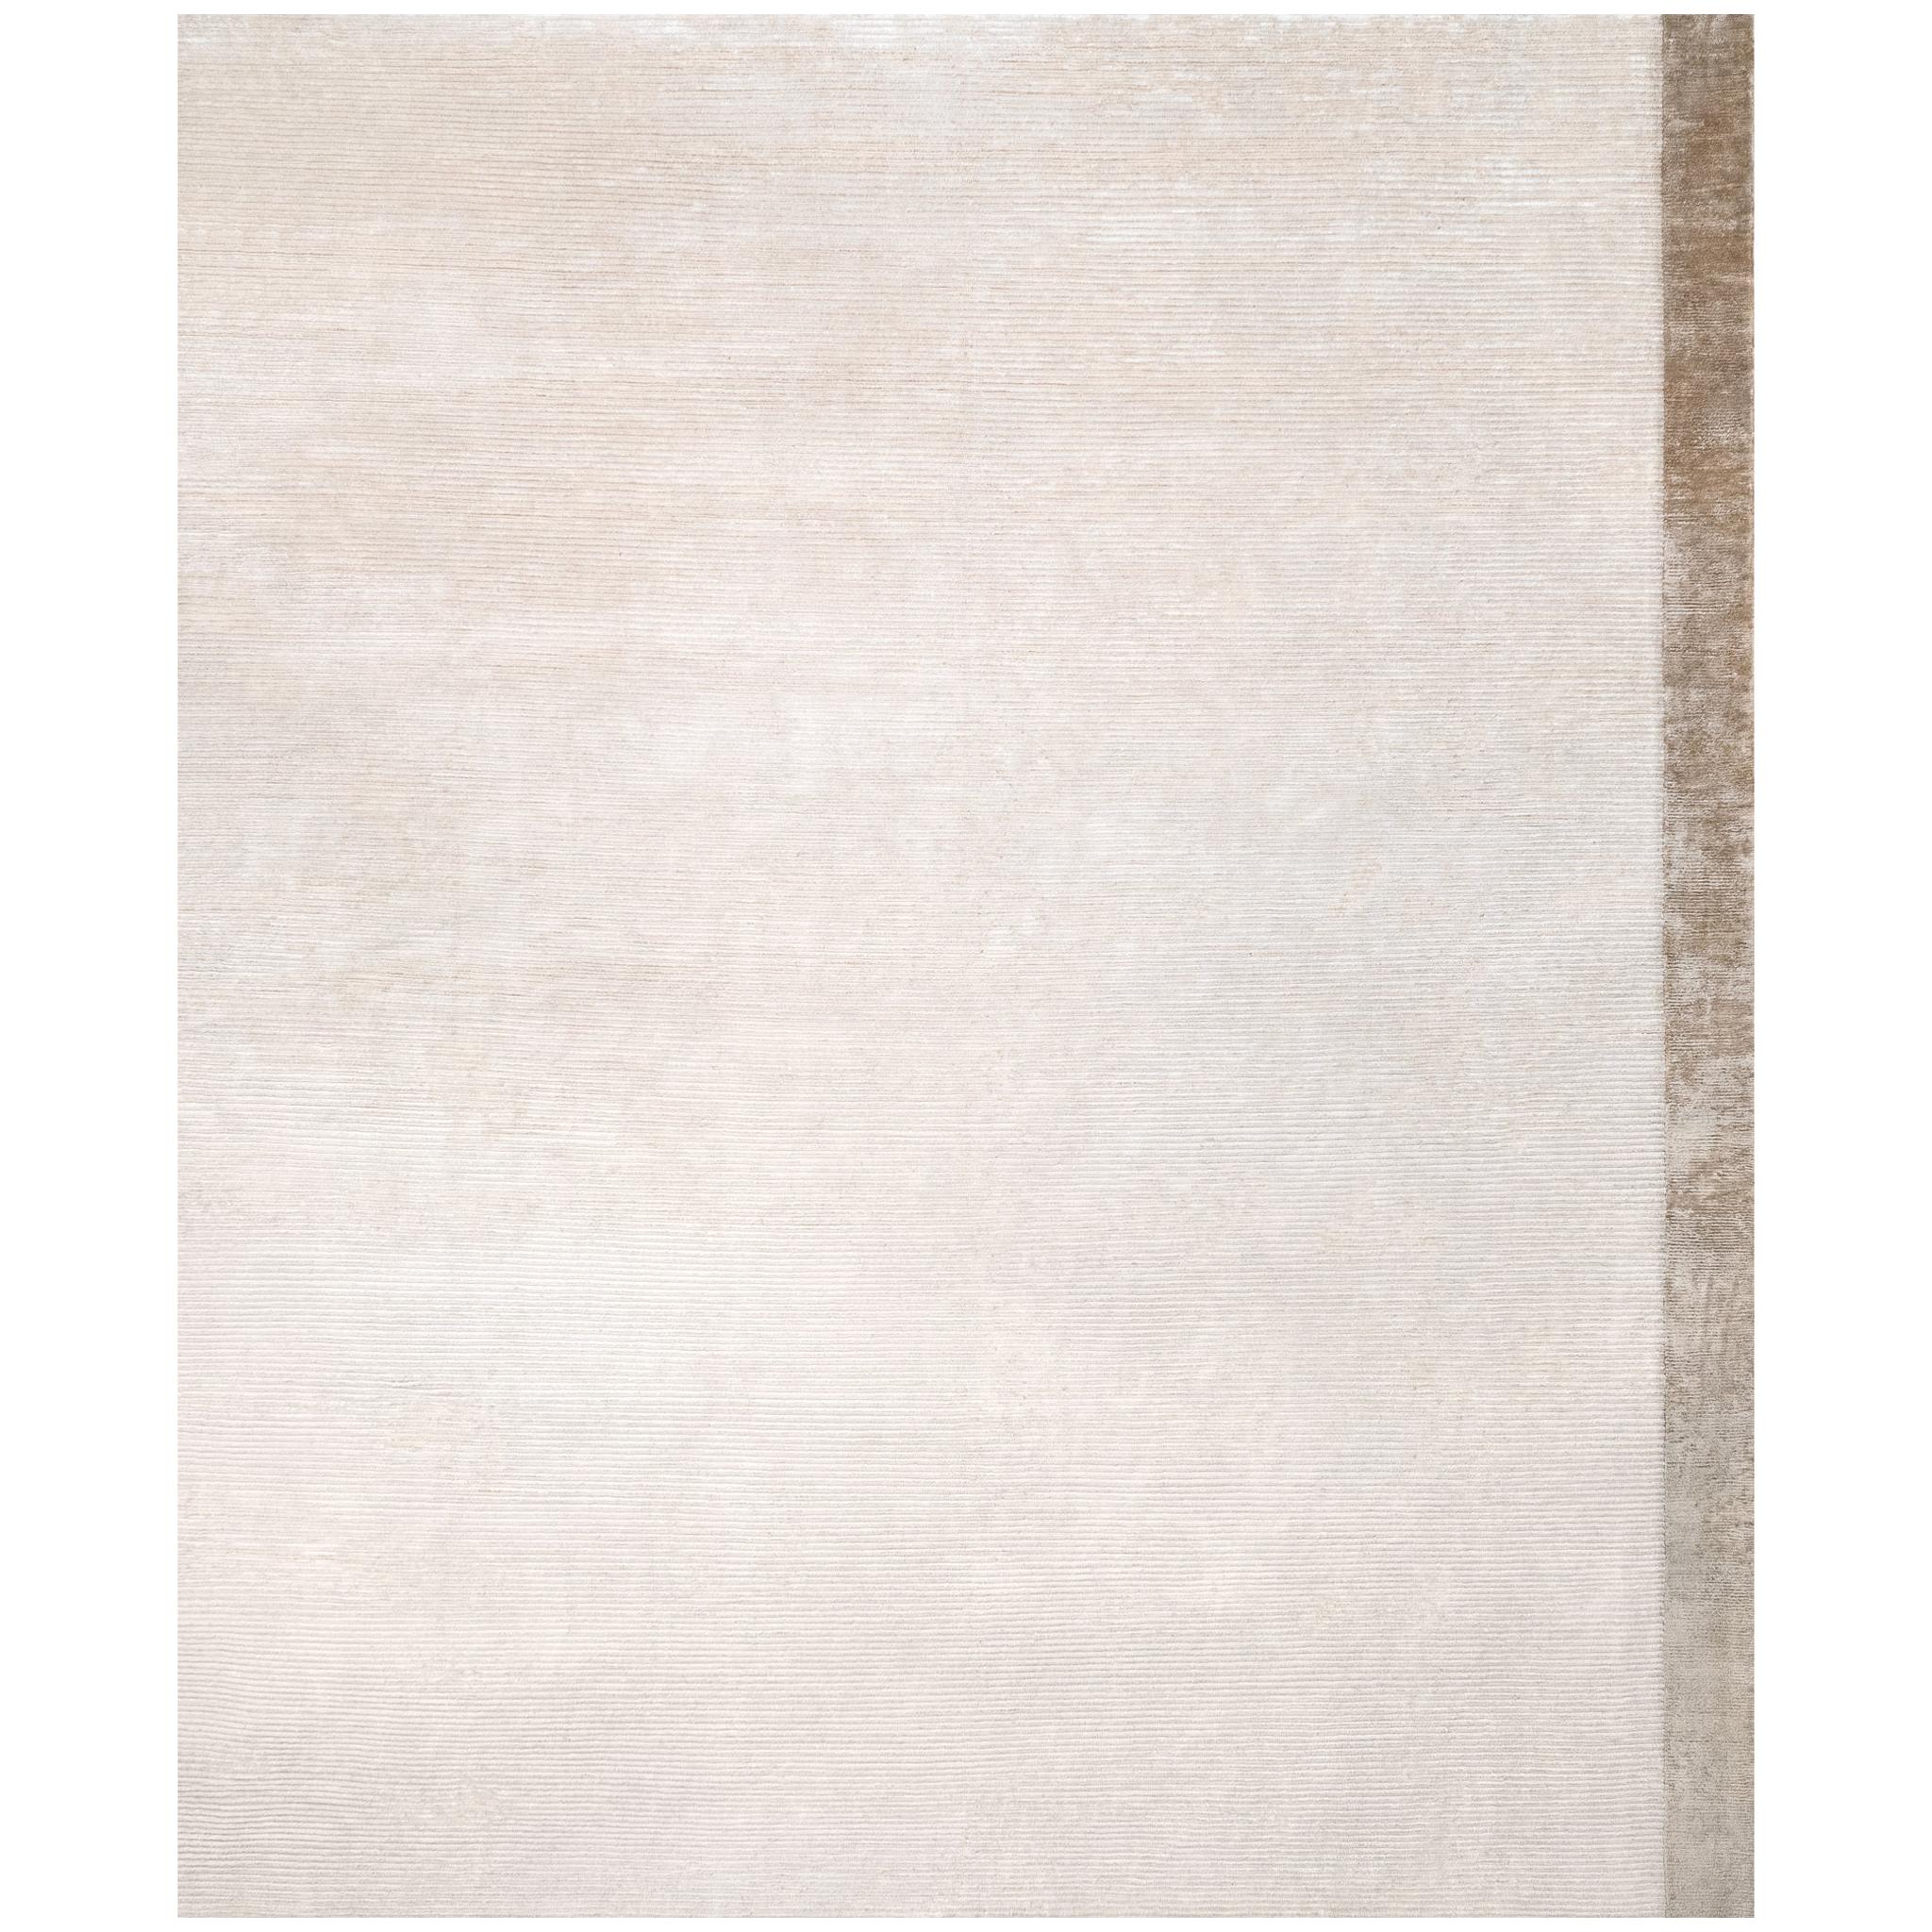 Plain White beige Contemporary rug Scandinavian Modern - Breton Beige For Sale